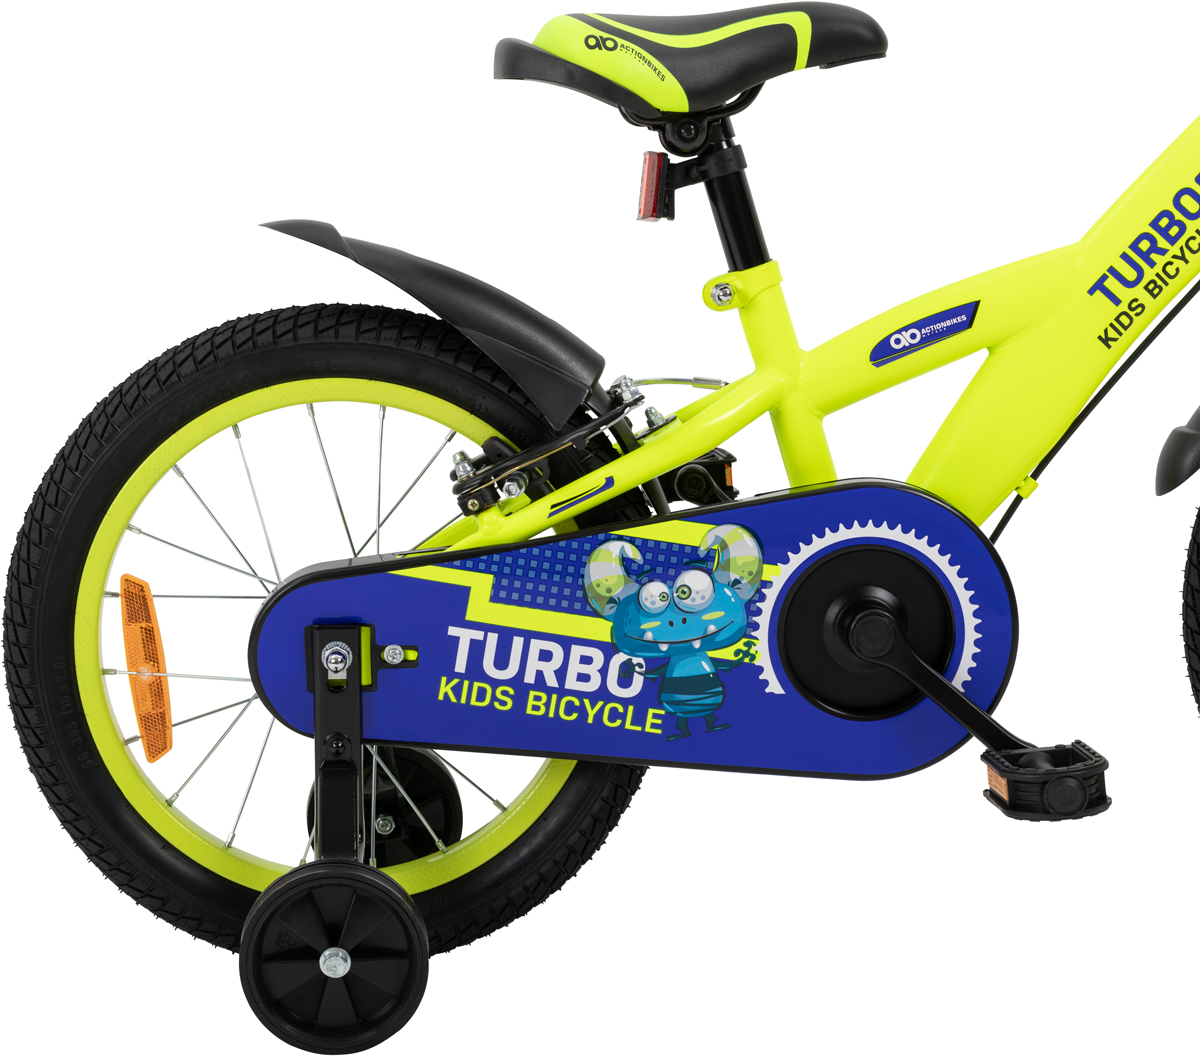 Kinderfahrrad Turbo 16 Zoll ᐅ Actionbikes Fahrrad mit Stützrädern